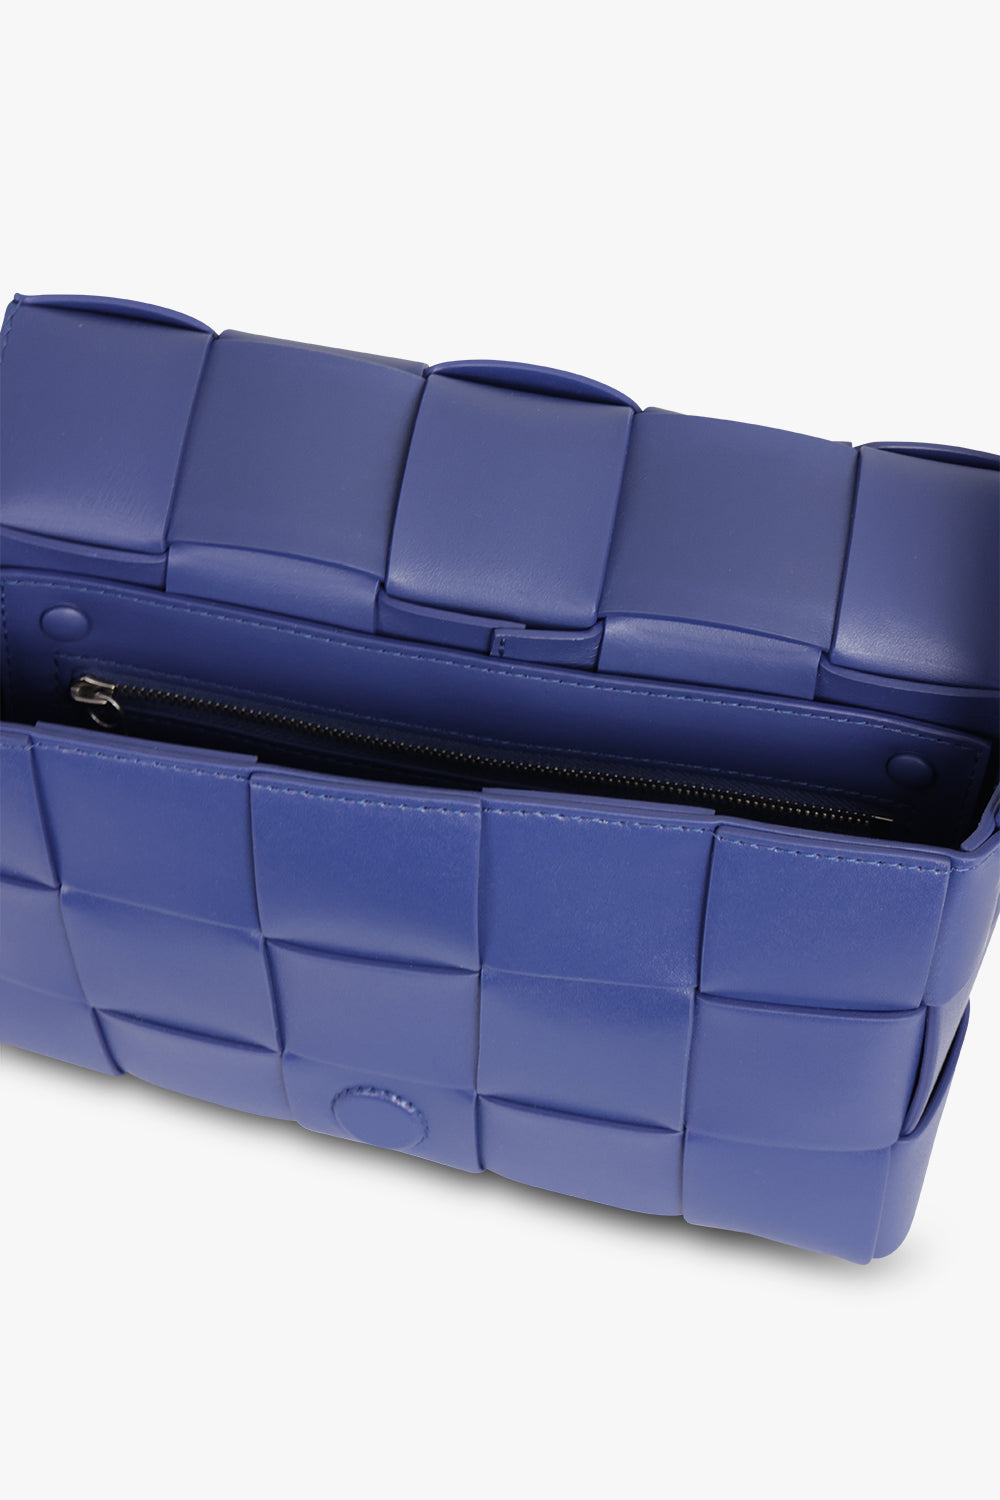 BOTTEGA VENETA BAGS Black Medium Casette Bag | Cruise/Silver